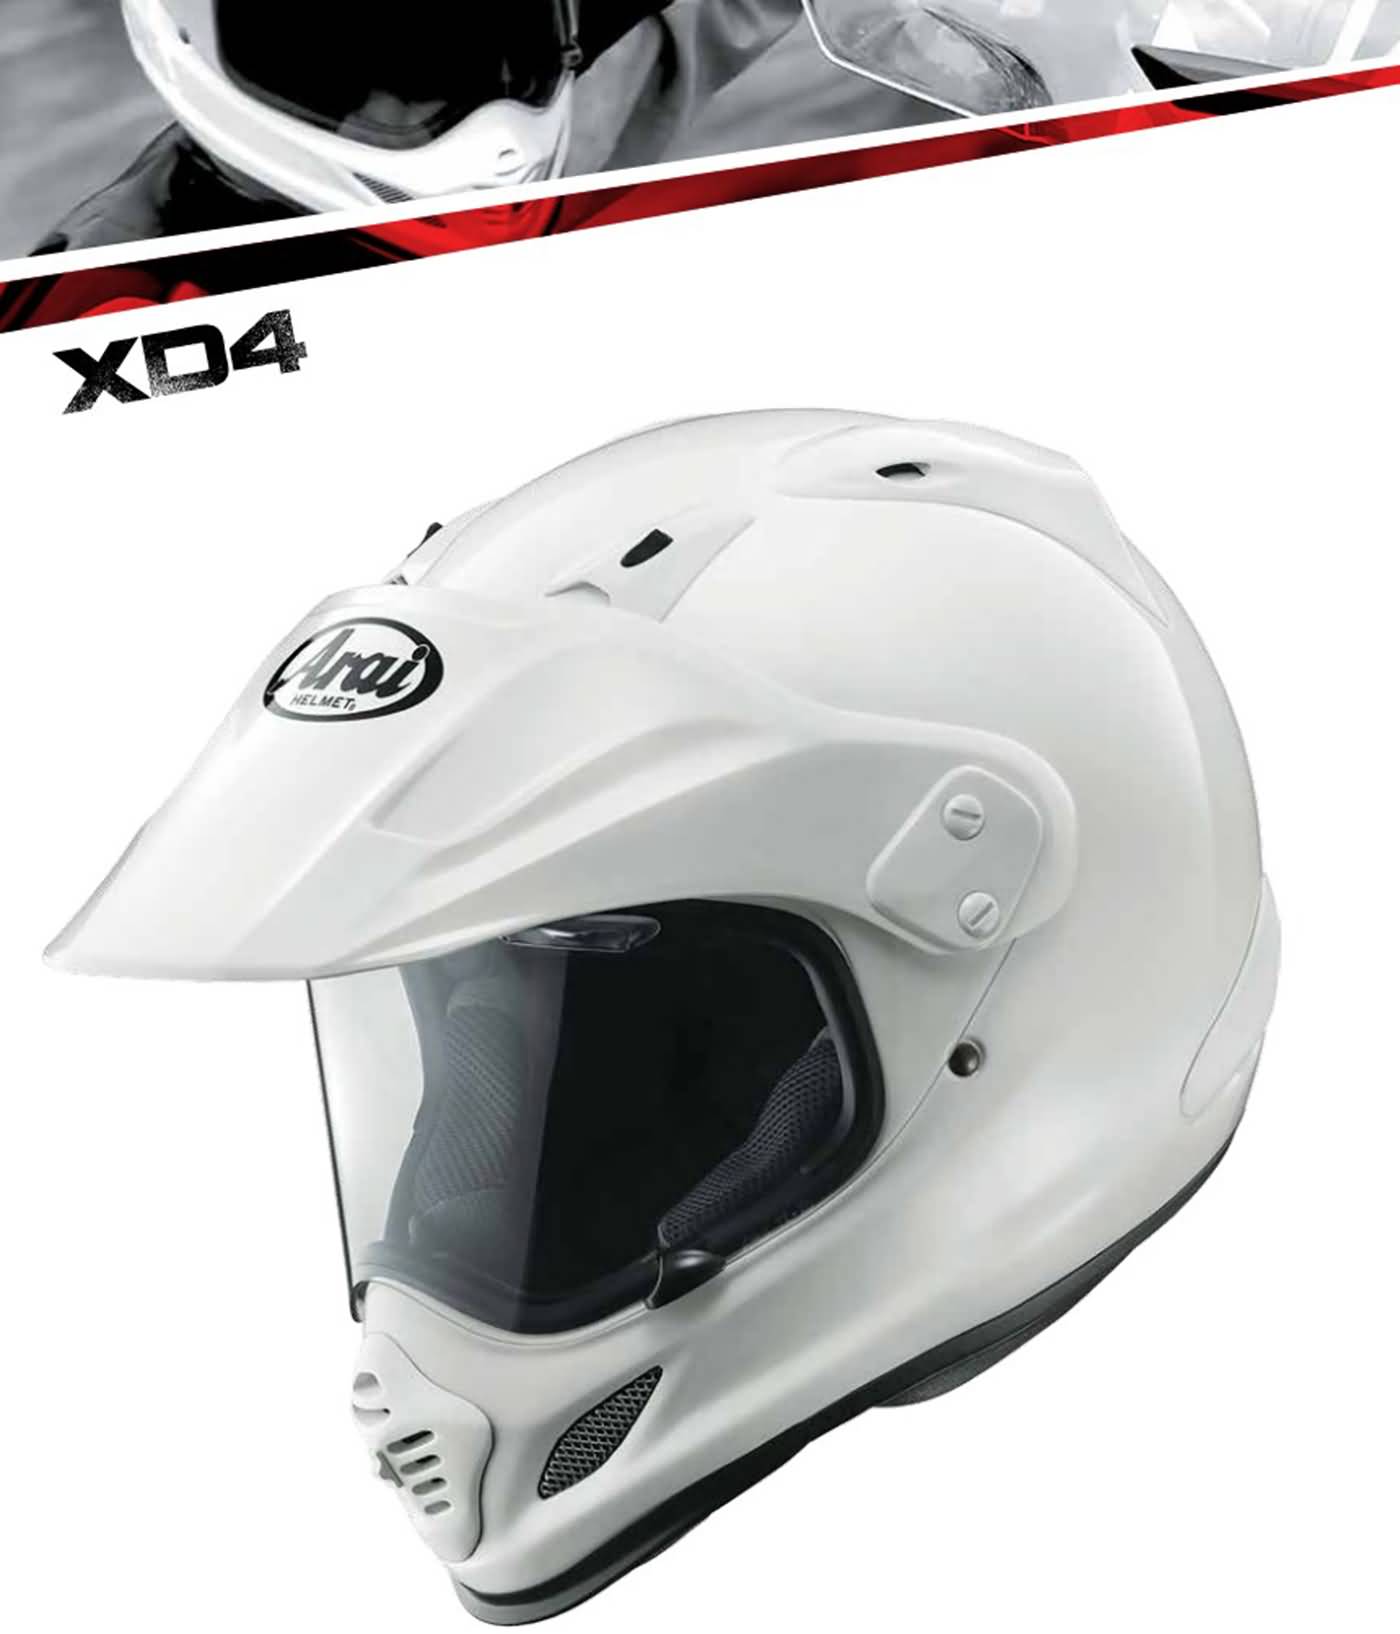 Arai 2016 XD4 Helmets